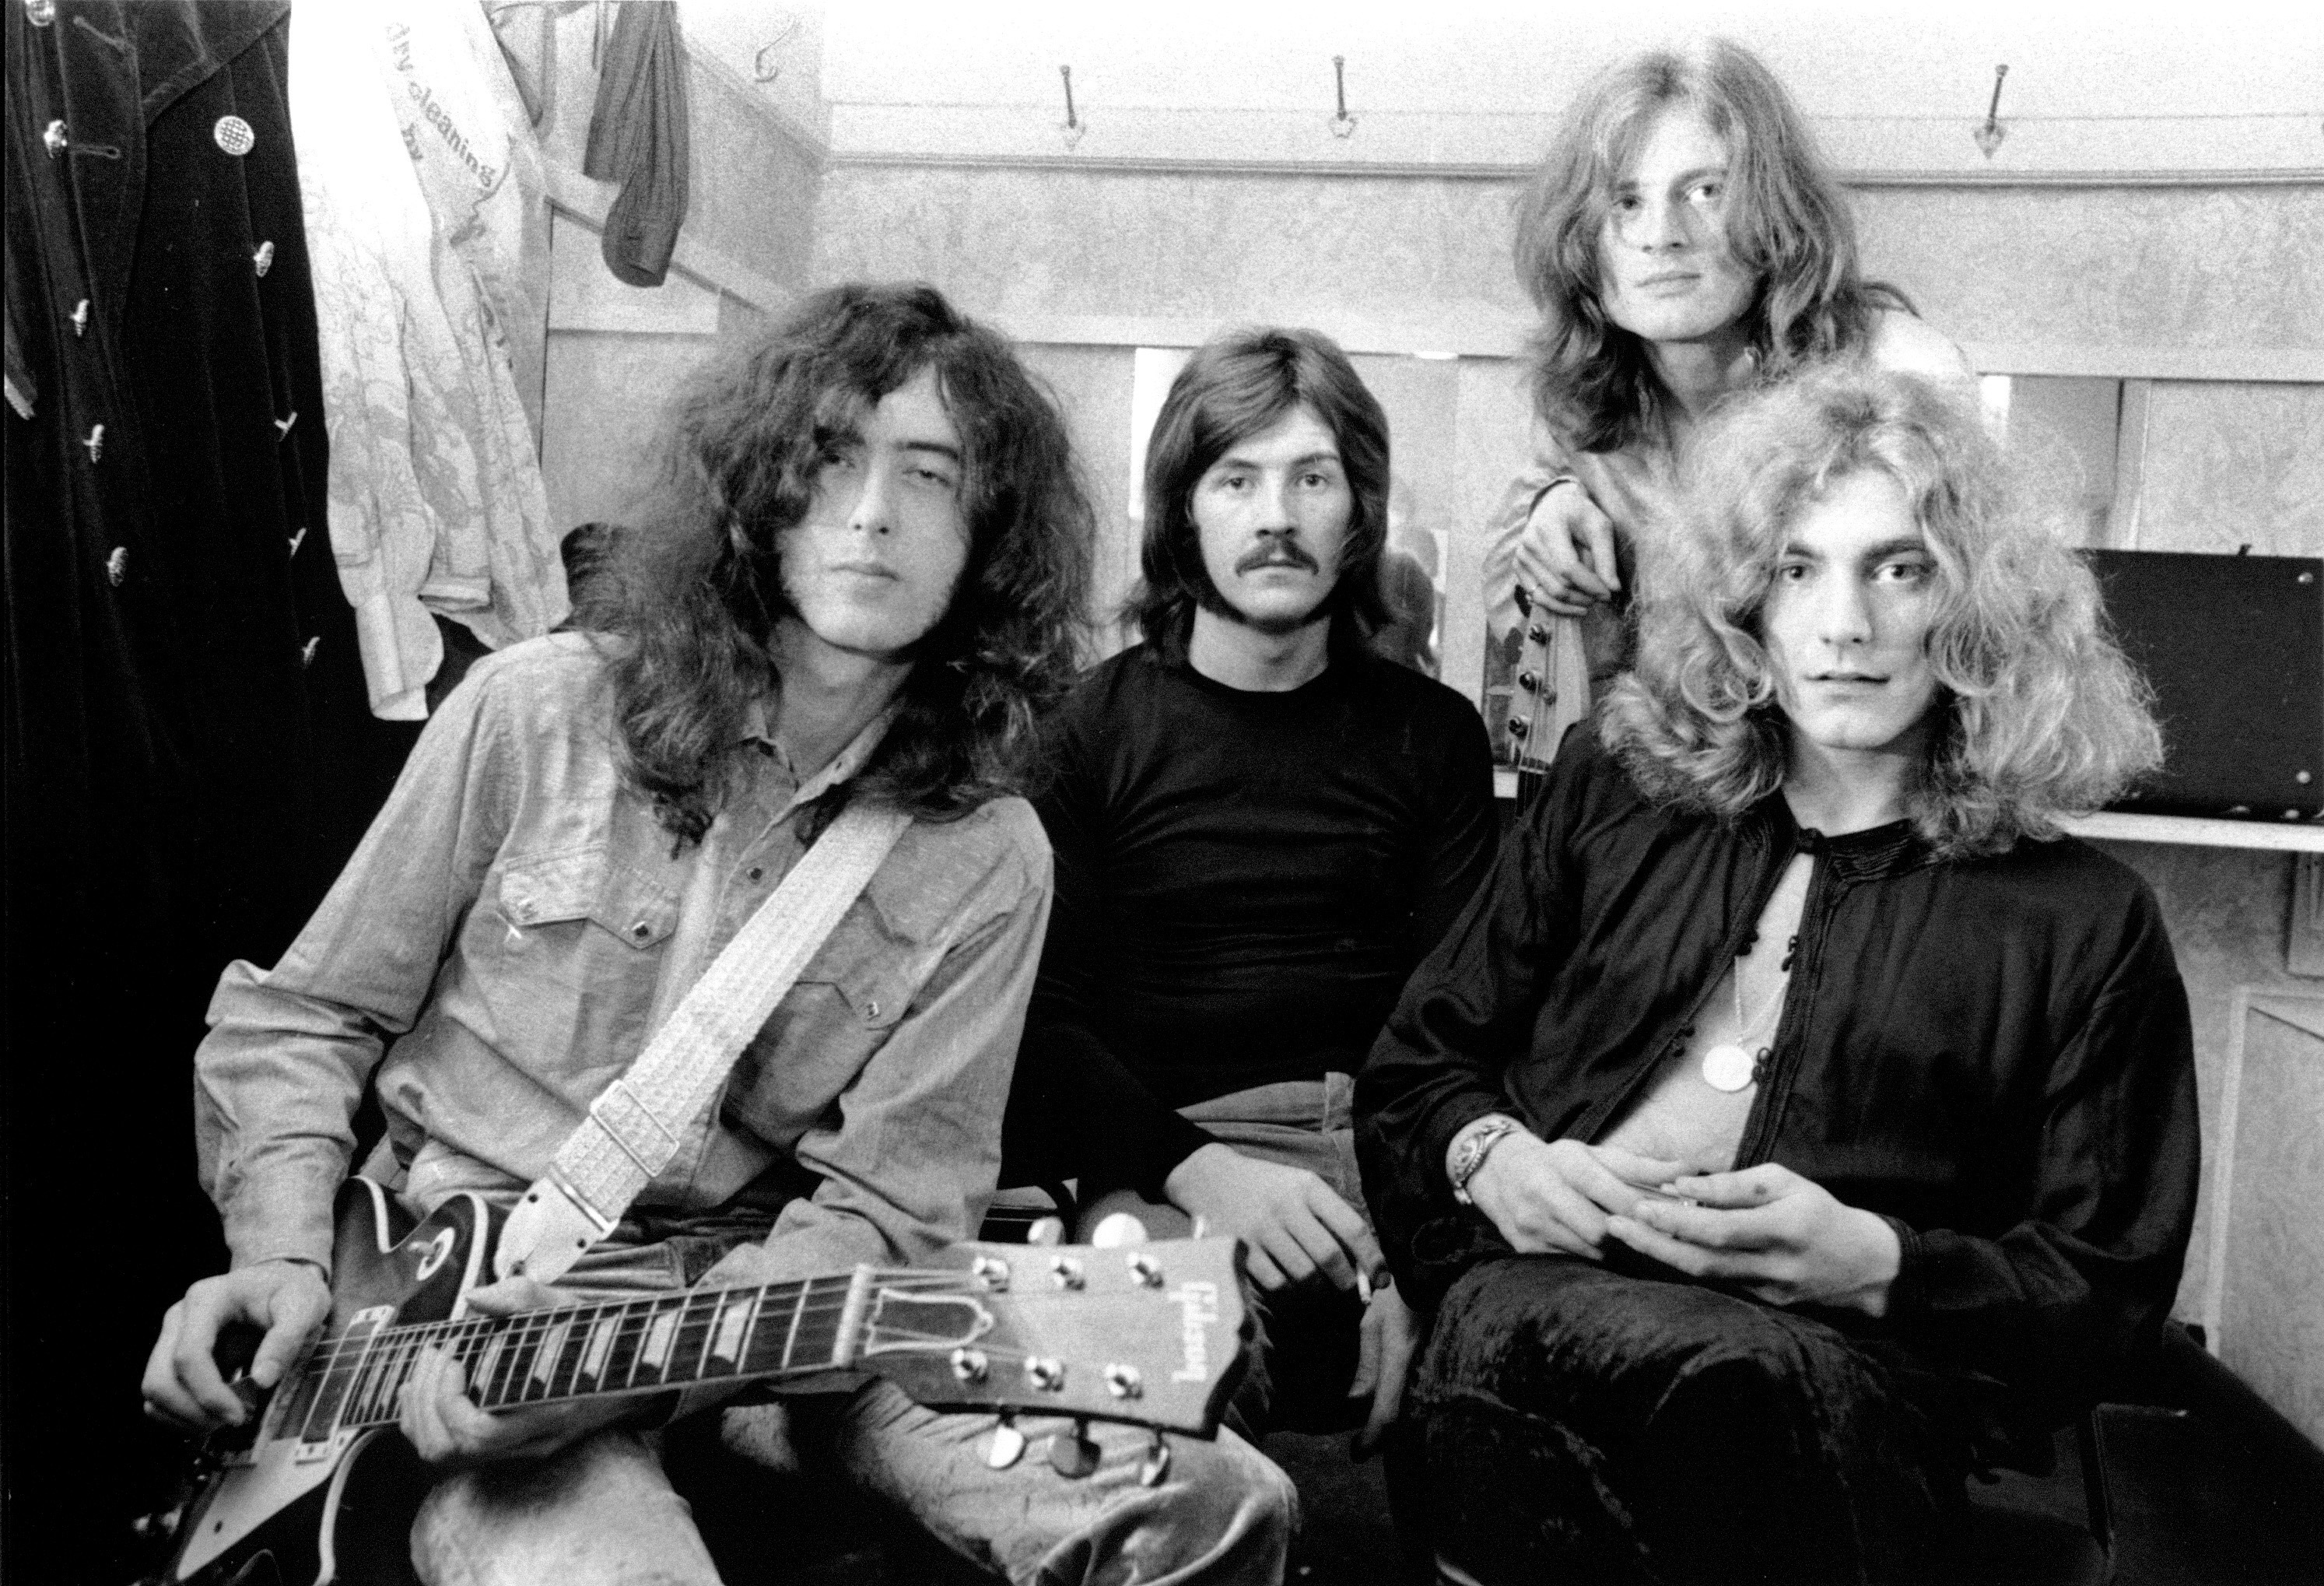 Led Zeppelin's Jimmy Page, John Bonham, John Paul Jones, and Robert Plant